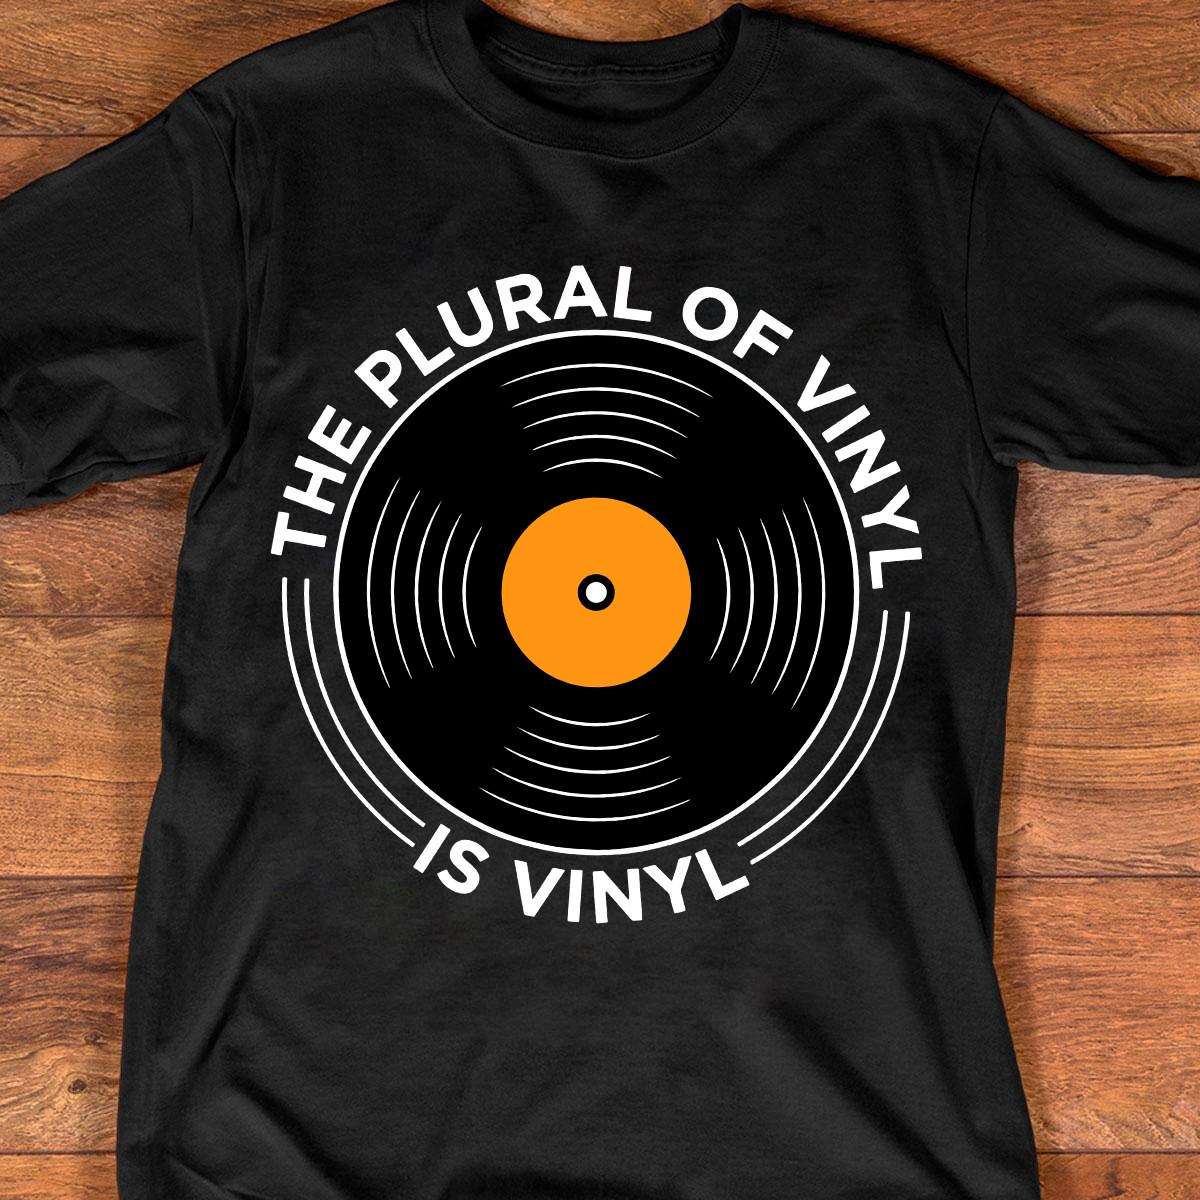 The plural of vinyl is vinyl - Vinyl records, love listen to vinyl